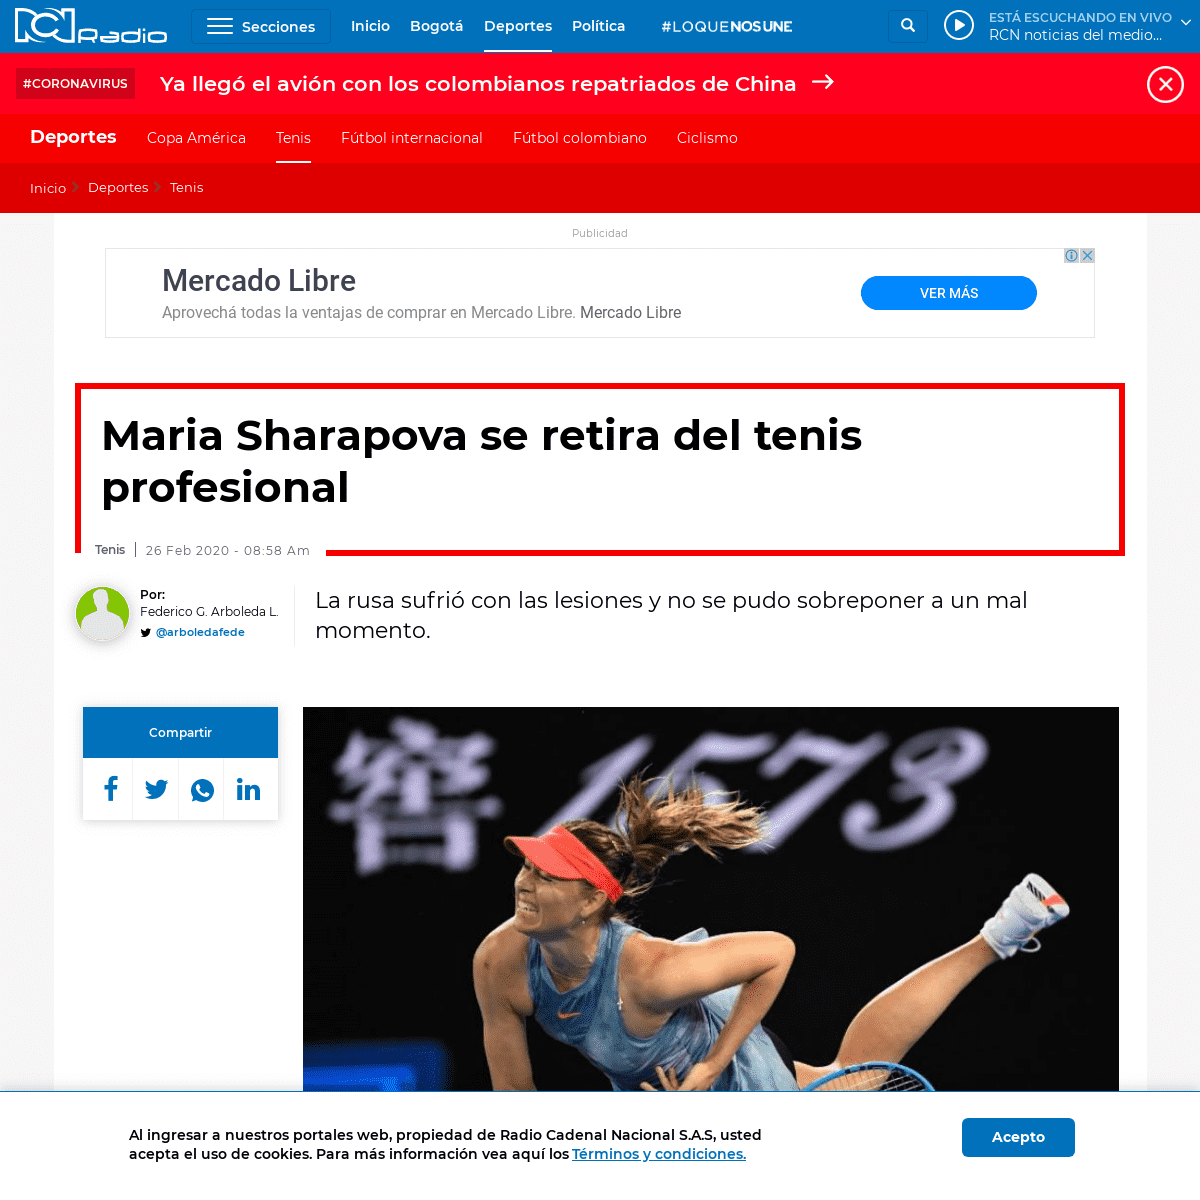 A complete backup of www.rcnradio.com/deportes/tenis/maria-sharapova-se-retira-del-tenis-profesional